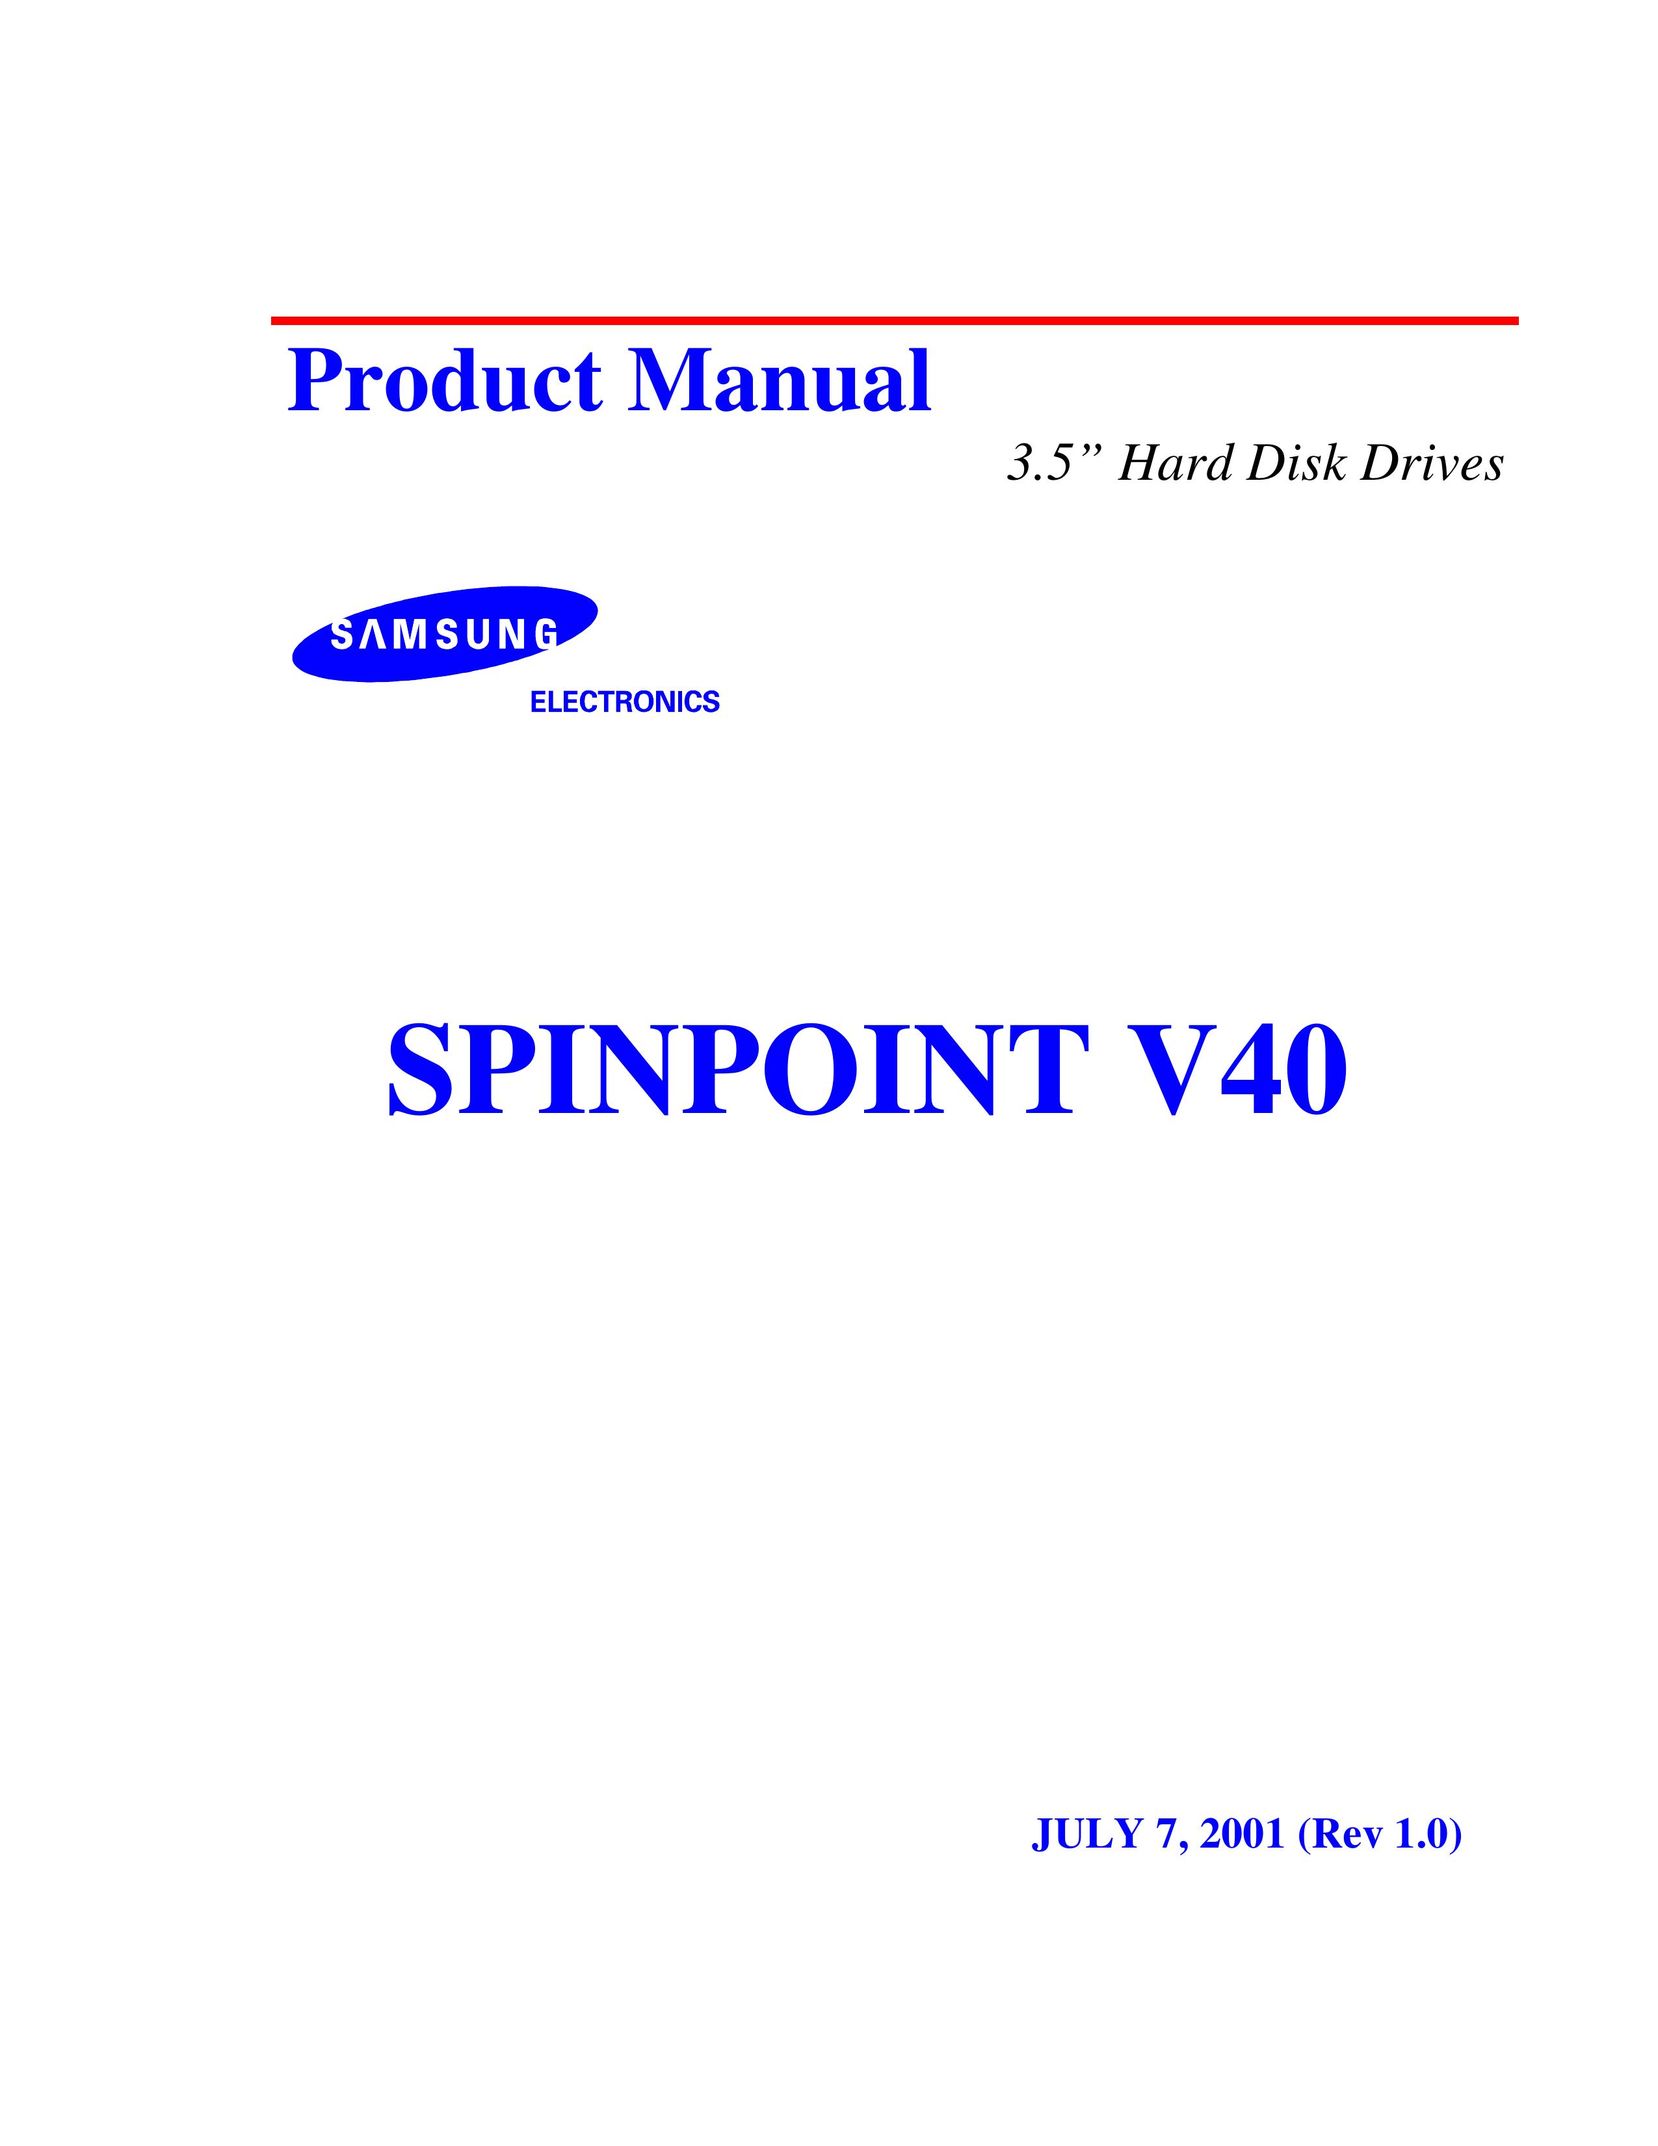 Samsung 3.5" hard disk drives Computer Hardware User Manual